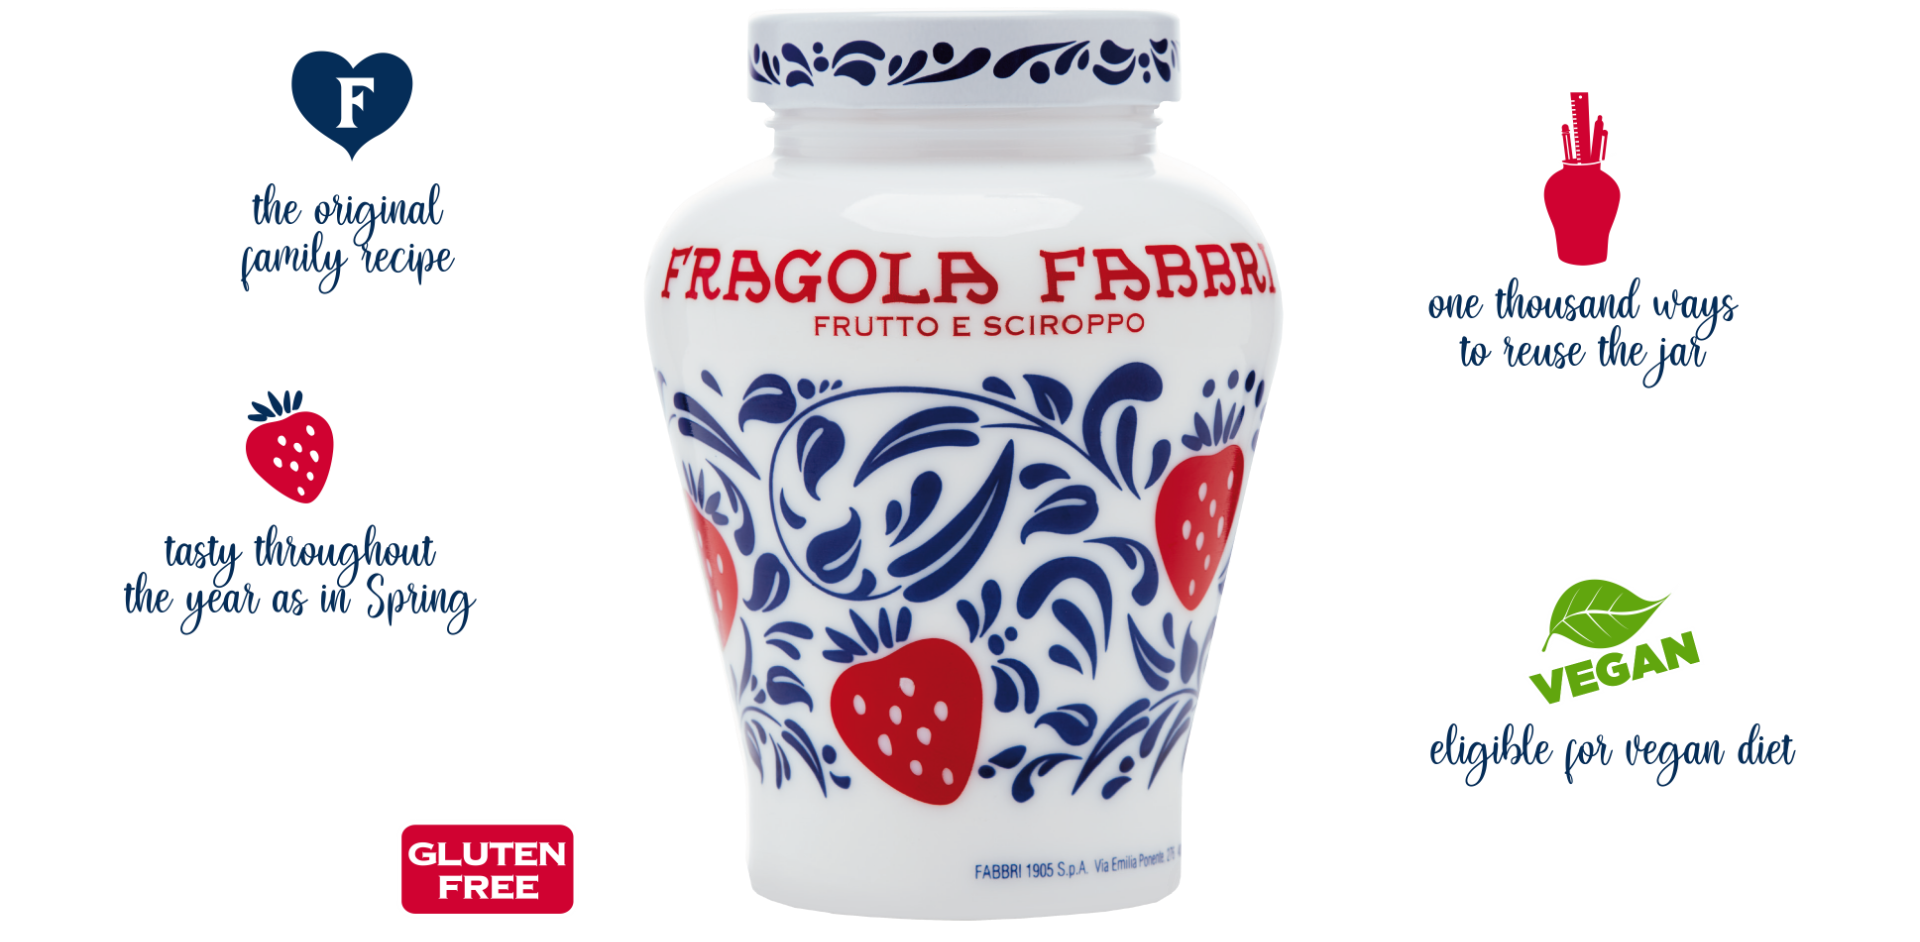 Fragola Fabbri products